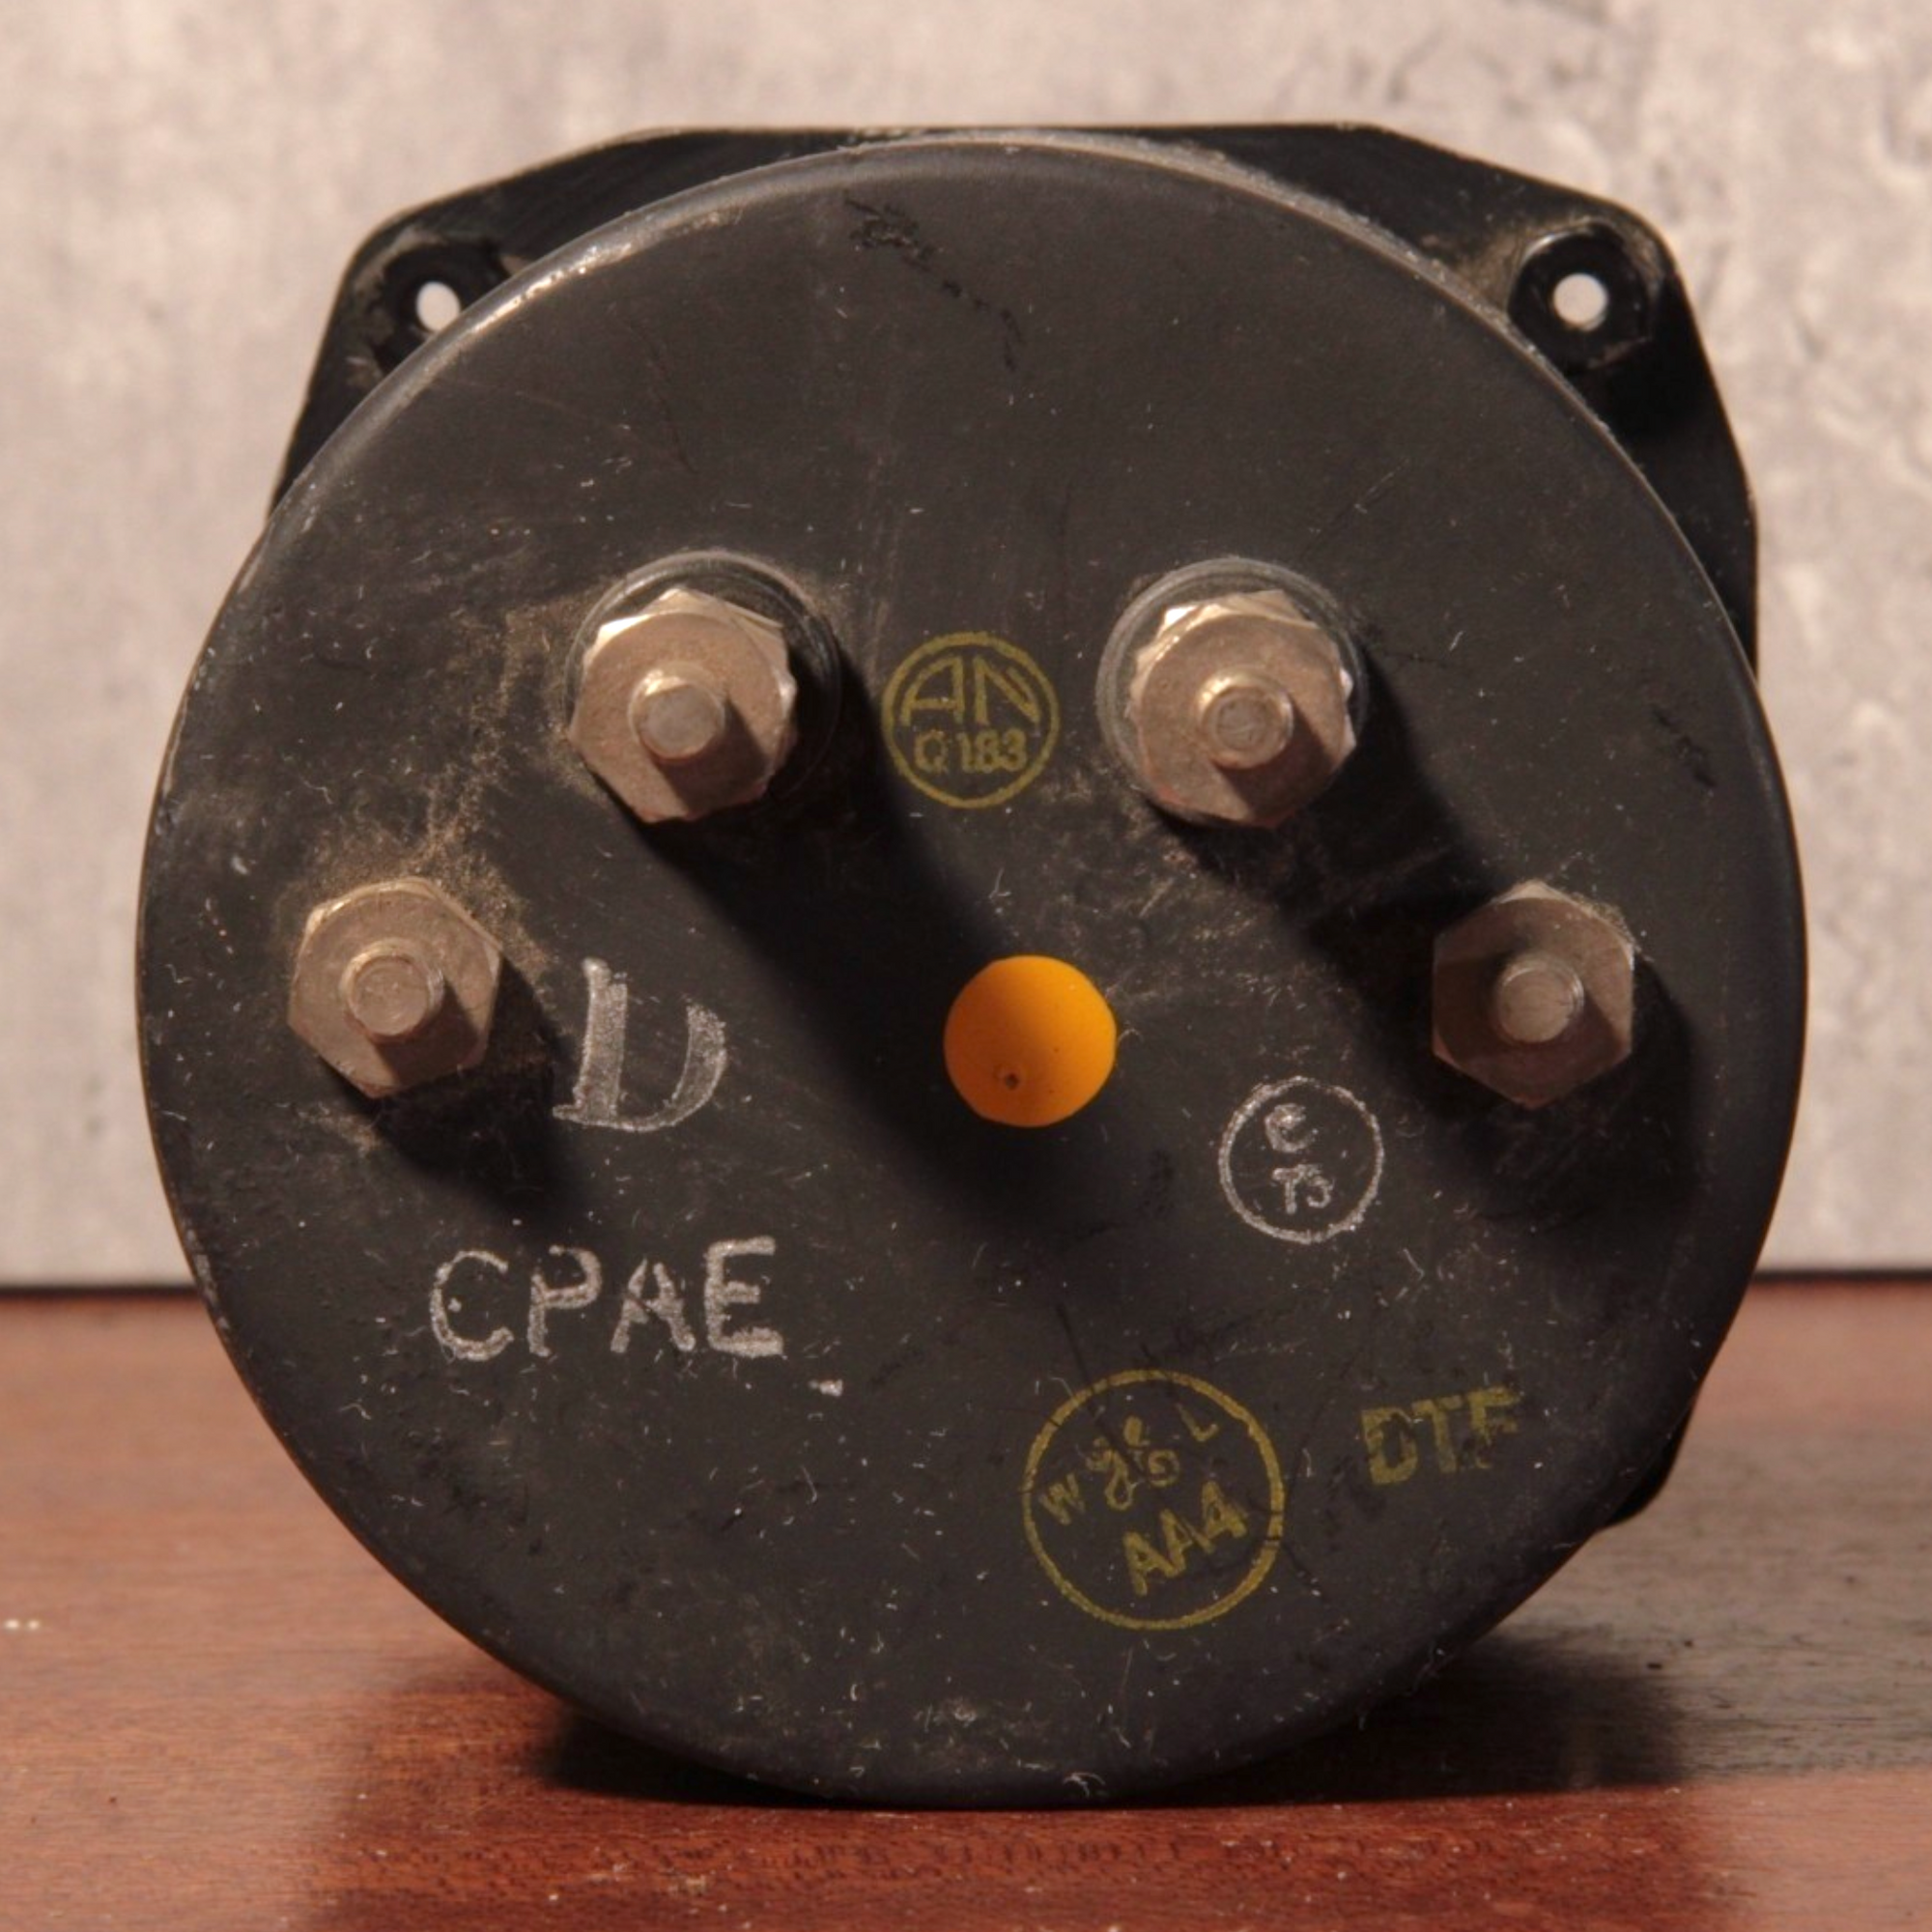 WWII Era Aircraft Instrument, Tachometer (Engine RPM), General Electric DO–35 - 1940s - World War II